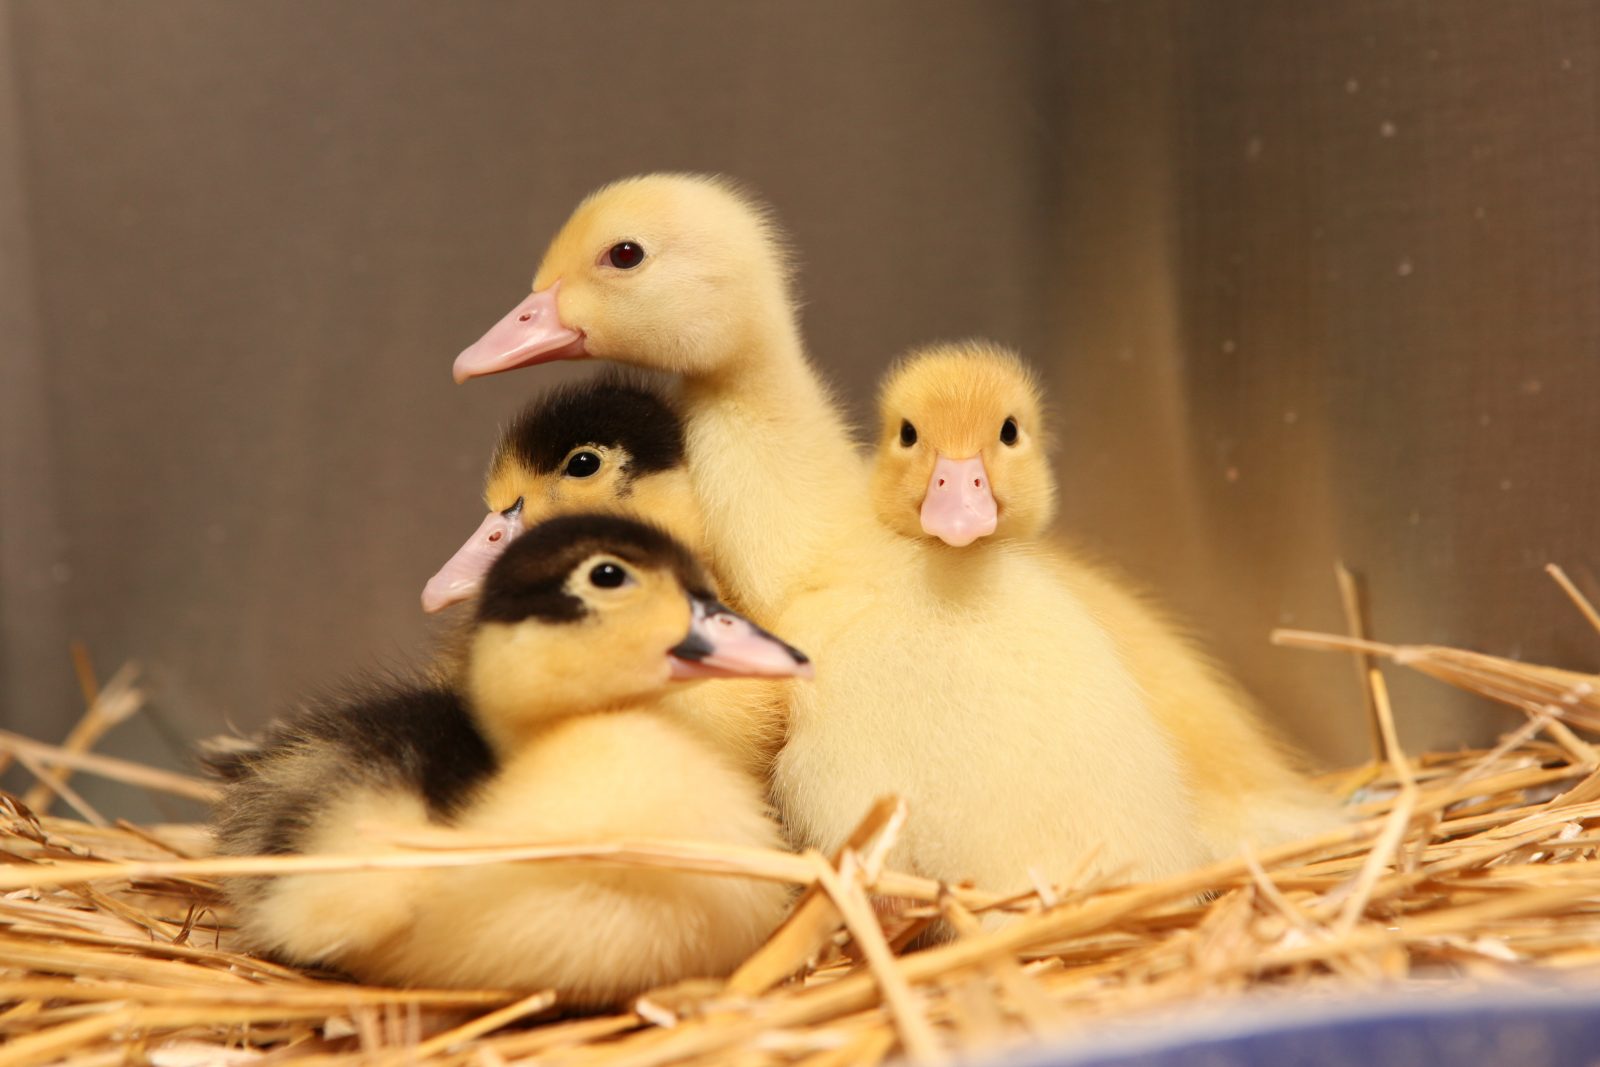 Ellen, Carrie, Emily, and Kristen: ducklings